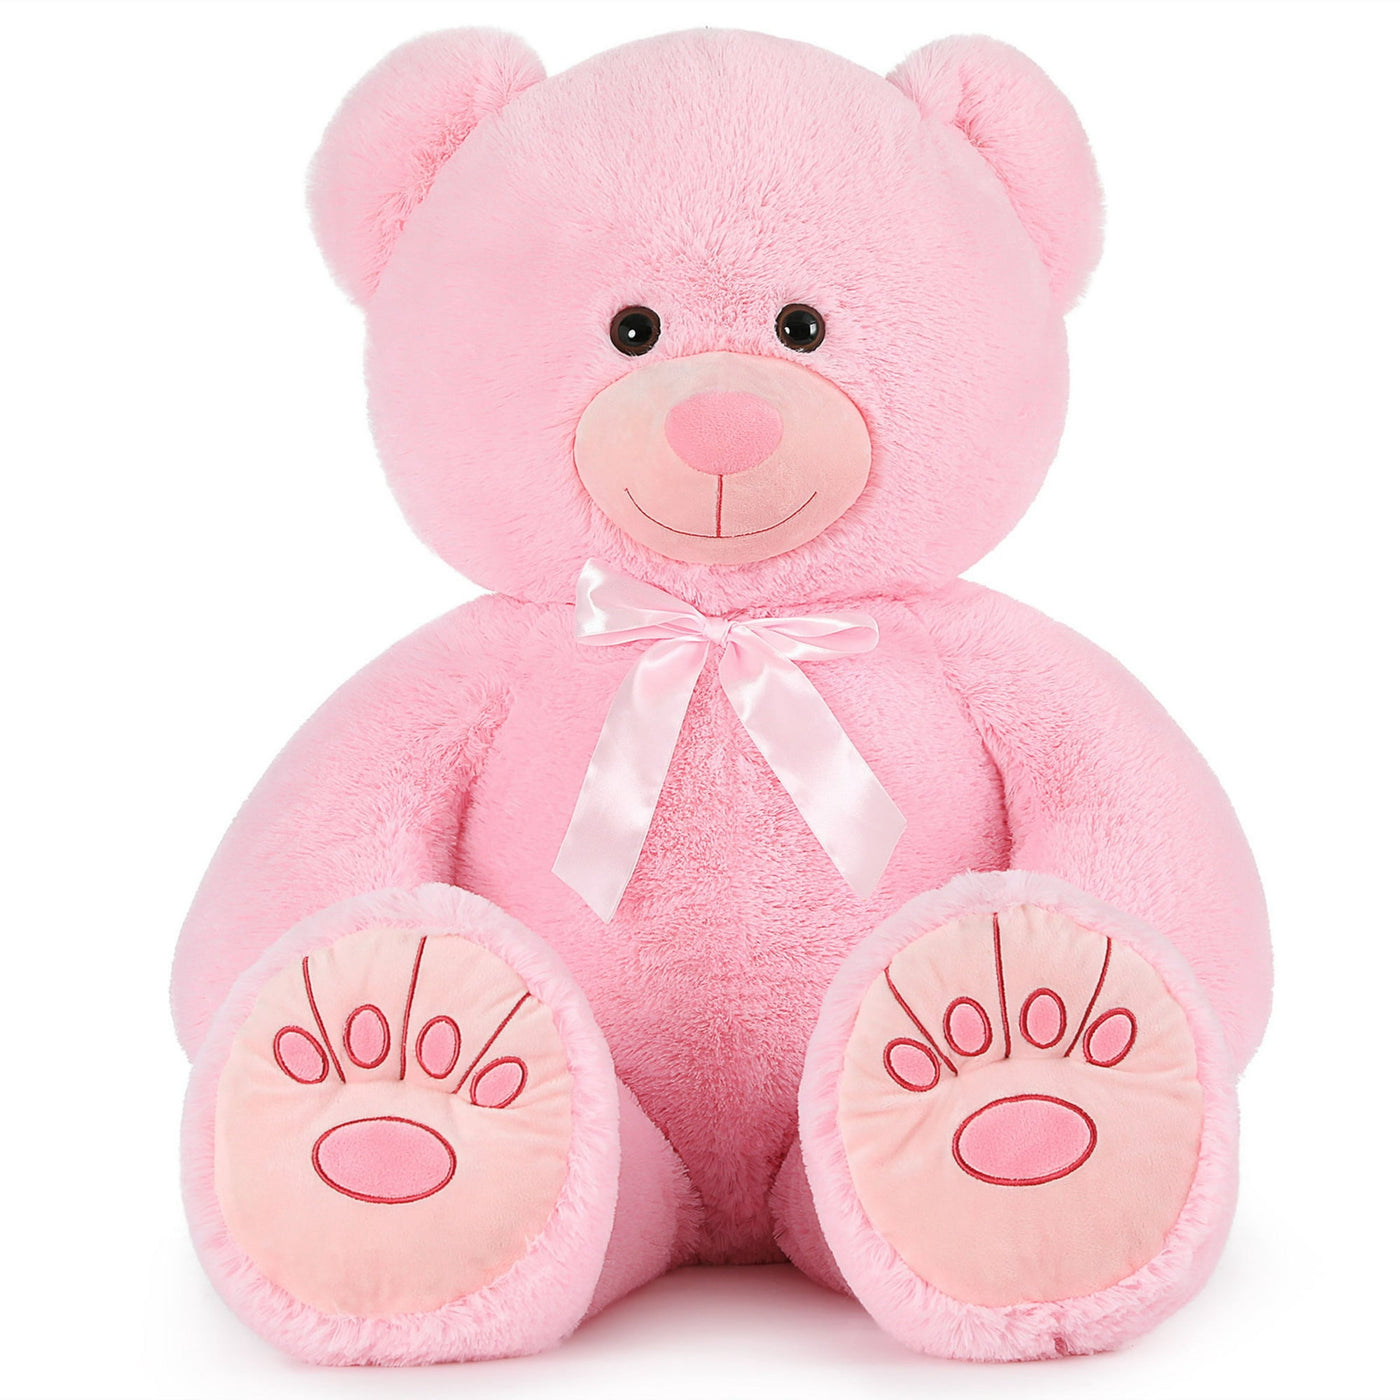 MaoGoLan 36" Giant Teddy Bear Fluffy Stuffed Animal with Footprint Plush Toy